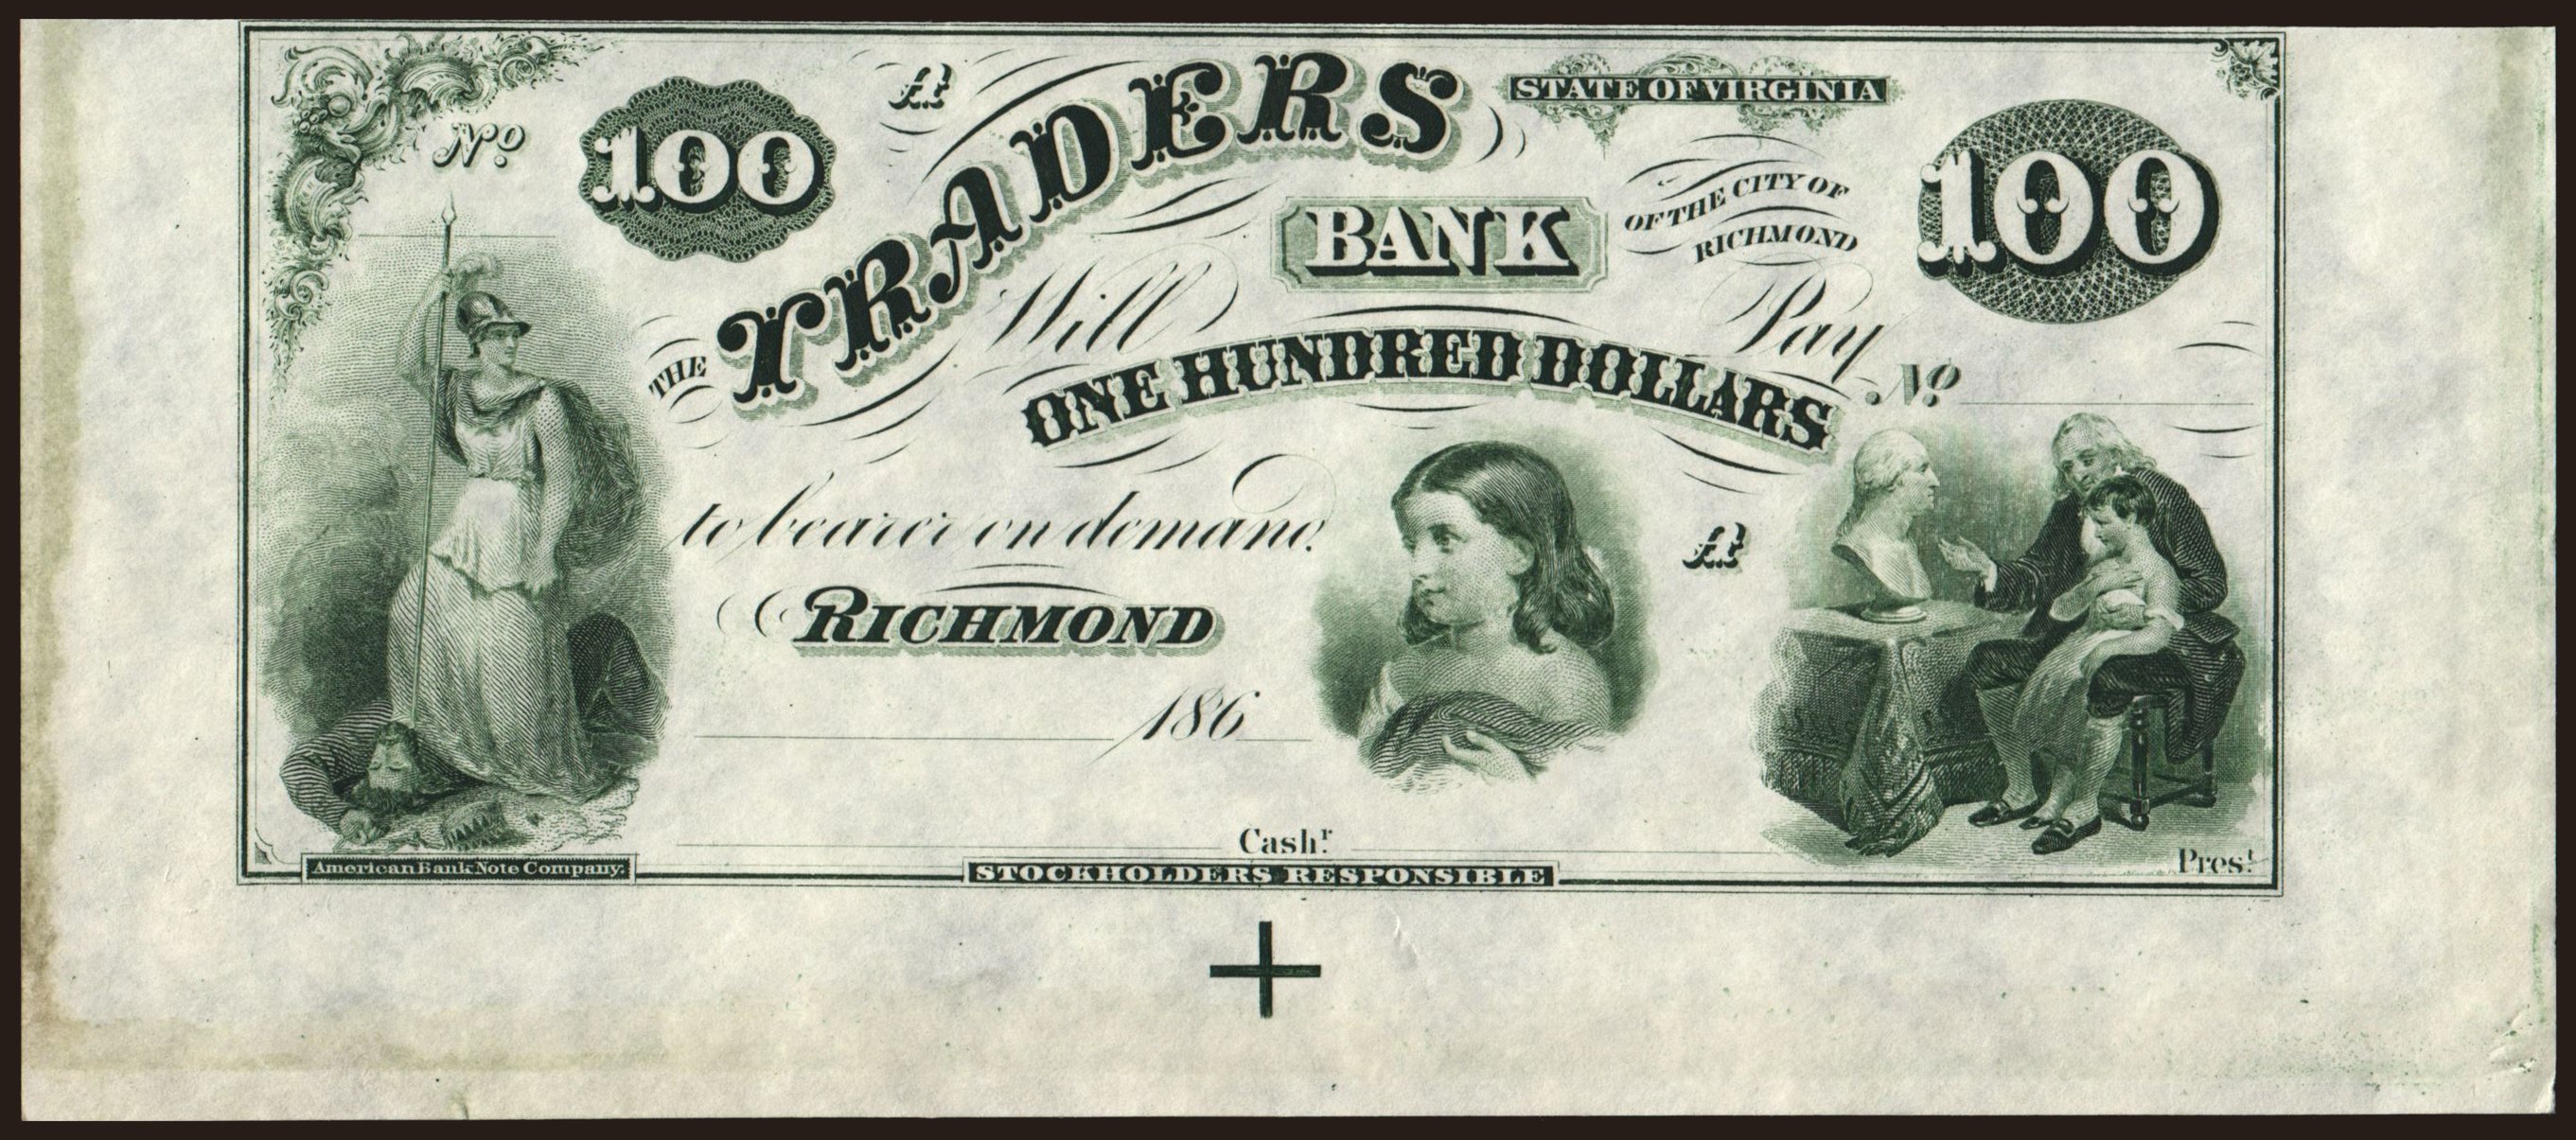 Richmond/ Traders Bank, 100 dollars, 186x